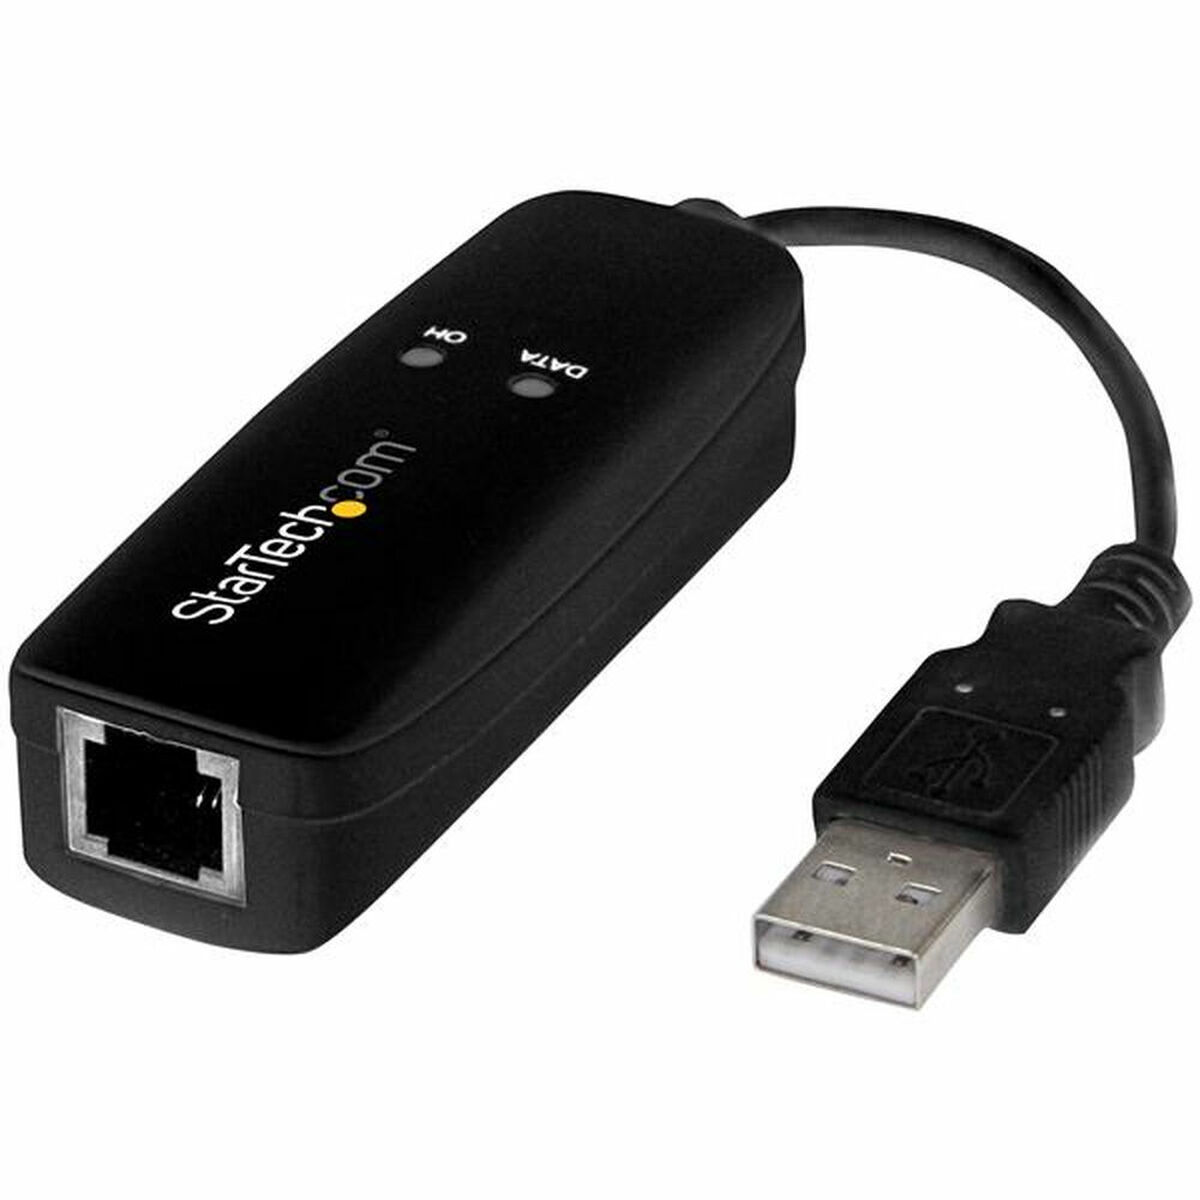 Adaptor USB Startech USB56KEMH2 RJ-11 RJ-11